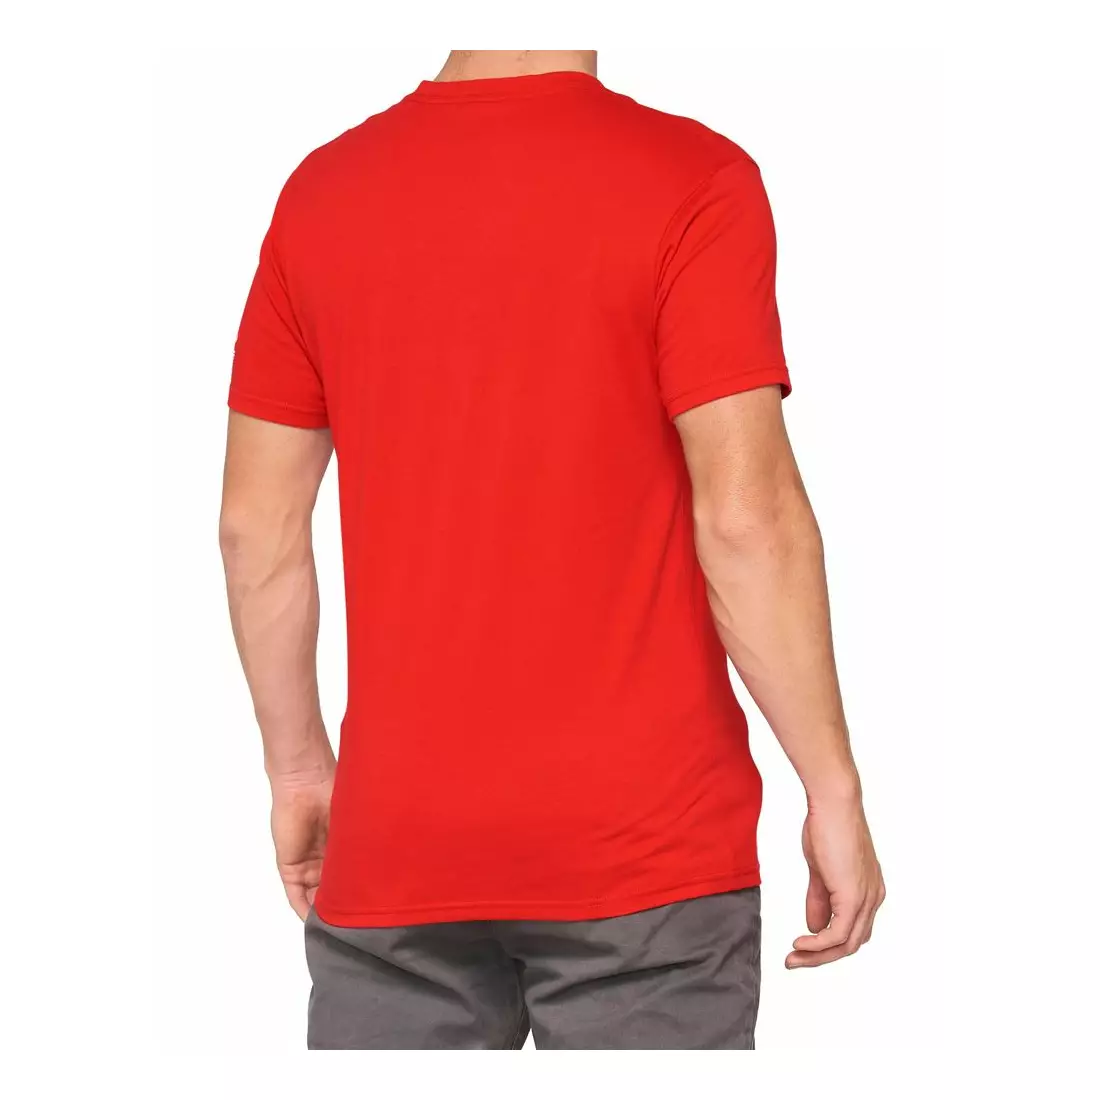 100% men's sports t-shirt with short sleeves TILLER red 